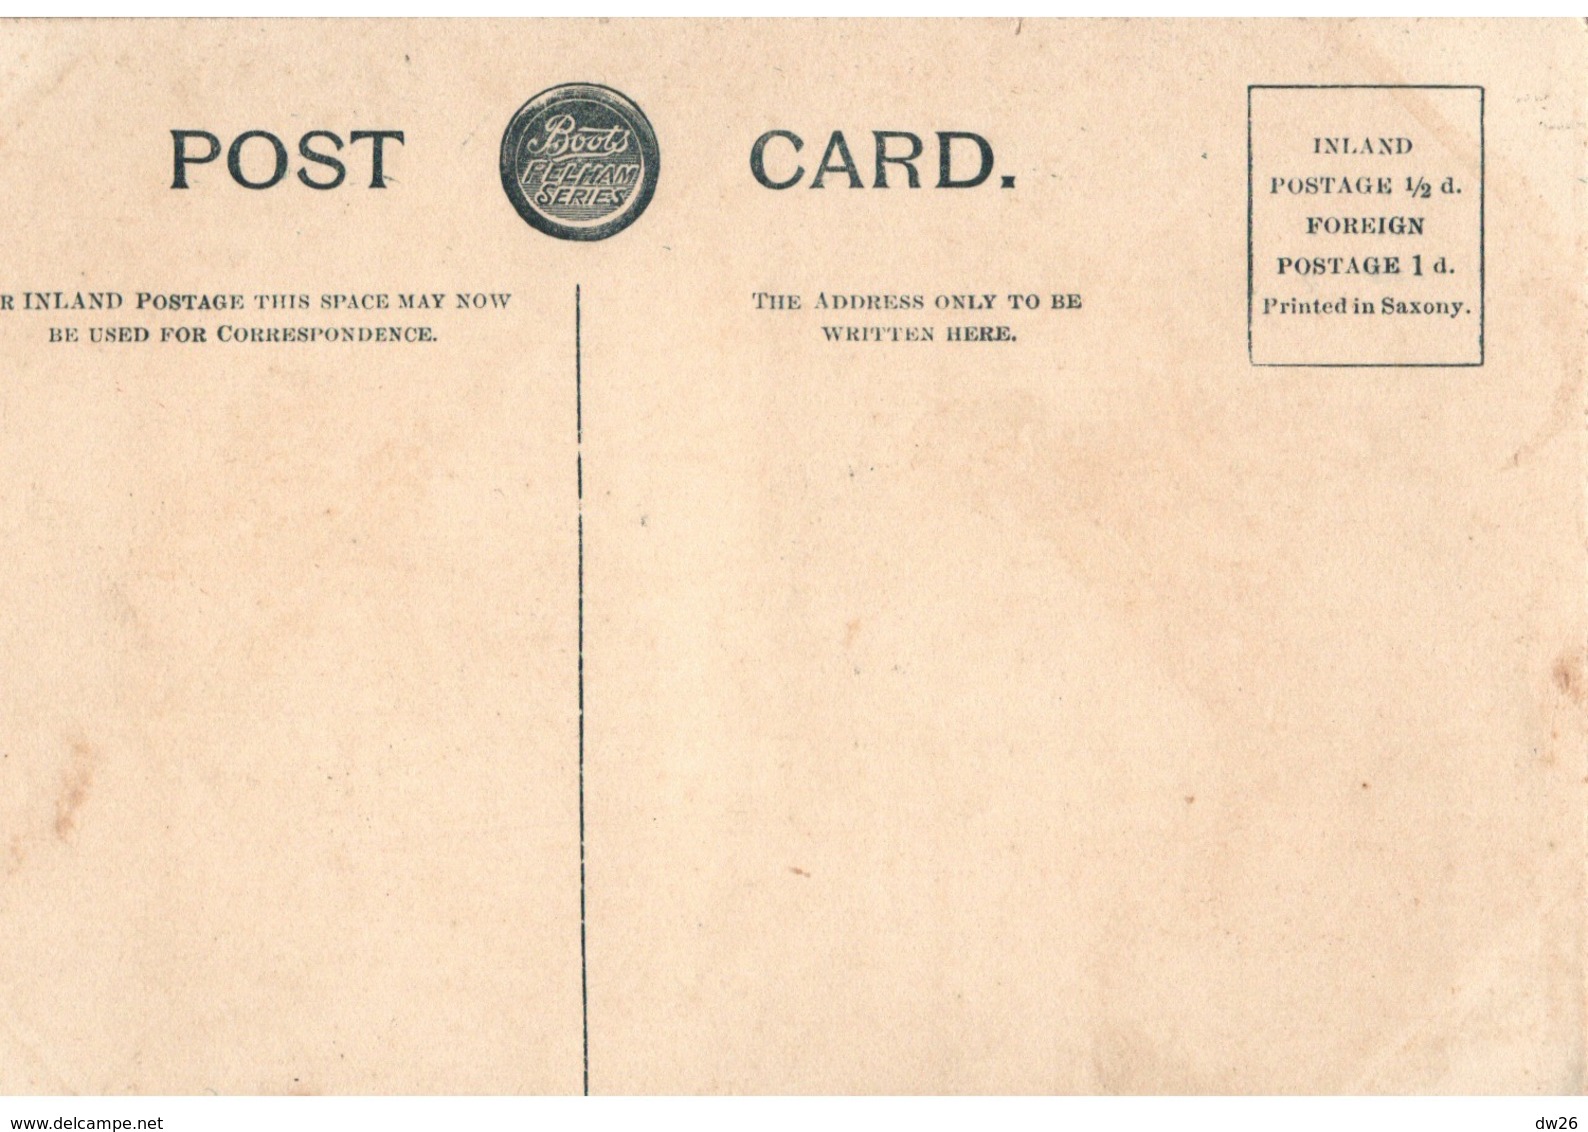 Boer War Memorial - Liverpool - King Liverpool Regiment - Pelham Series N° 6222 - Postcard Not Circulated - Liverpool